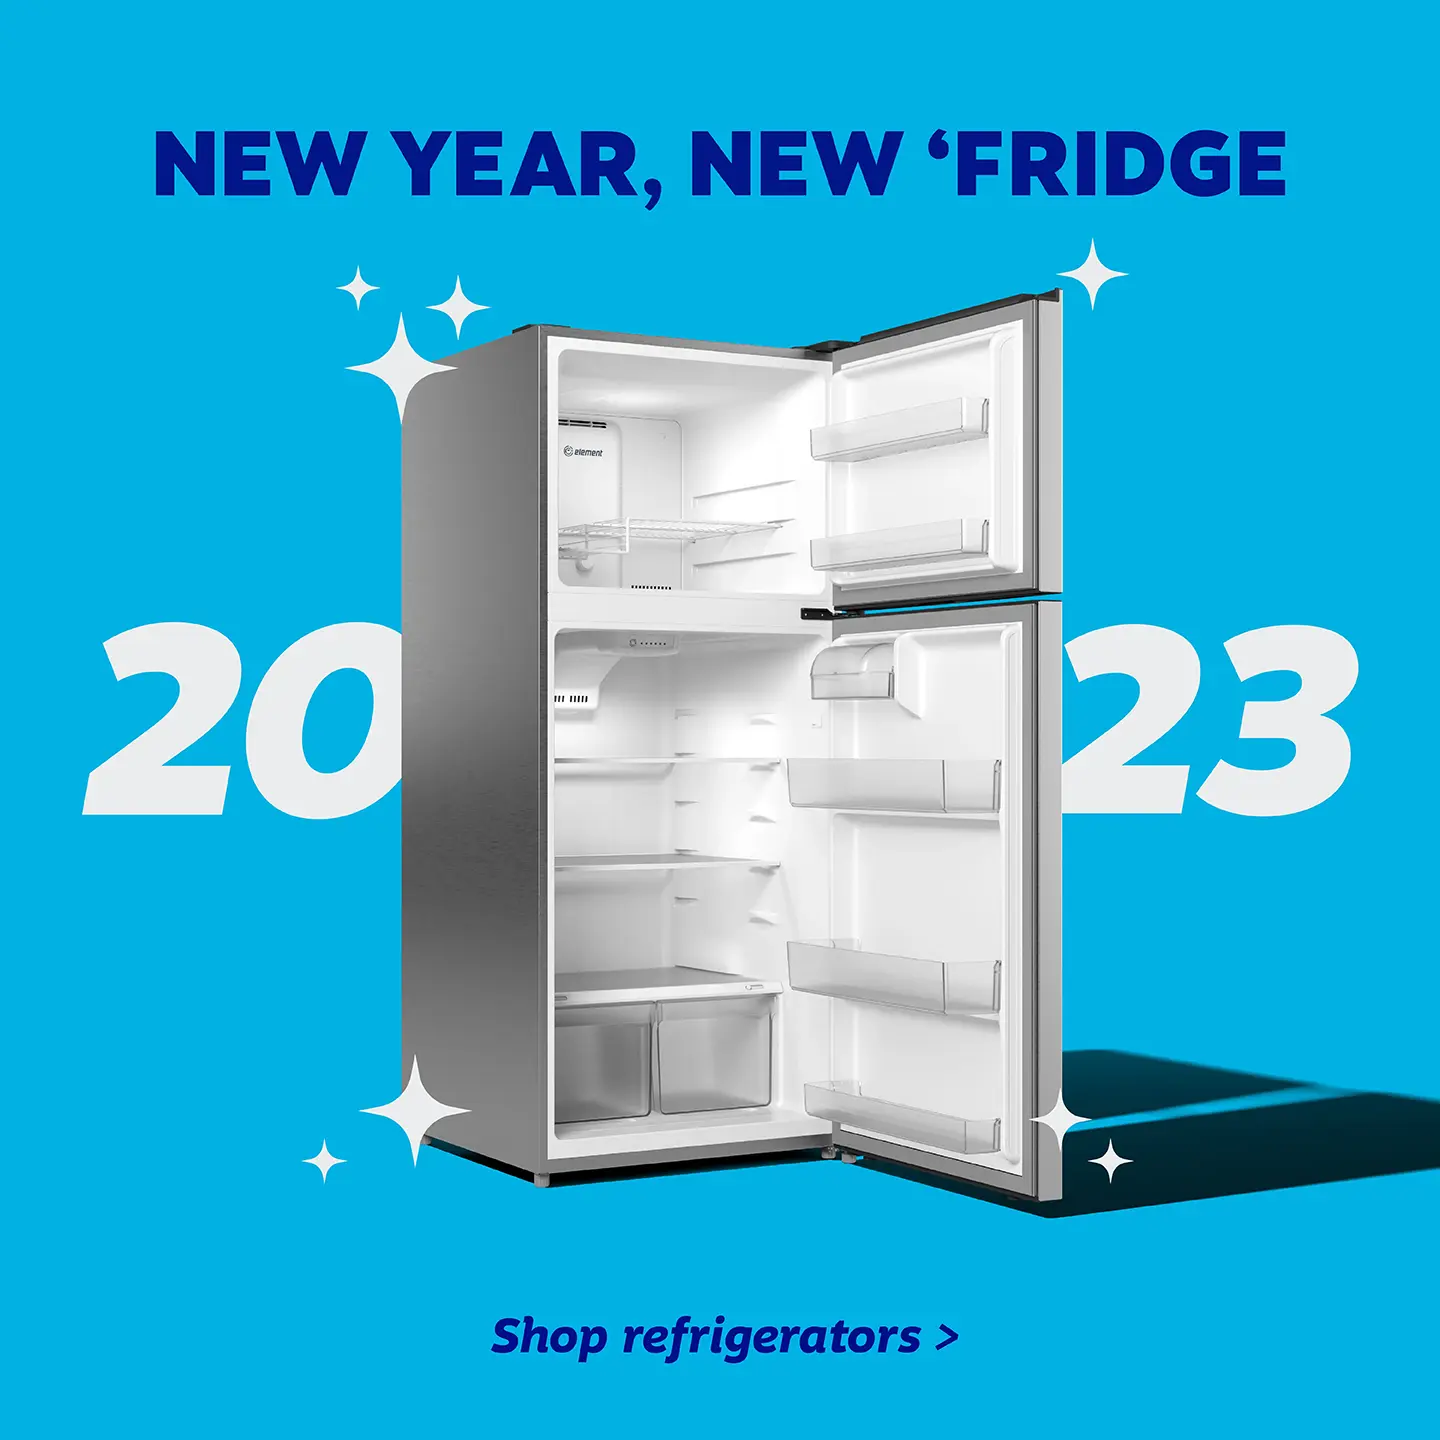 New year, new fridge - shop 2023 refrigerators